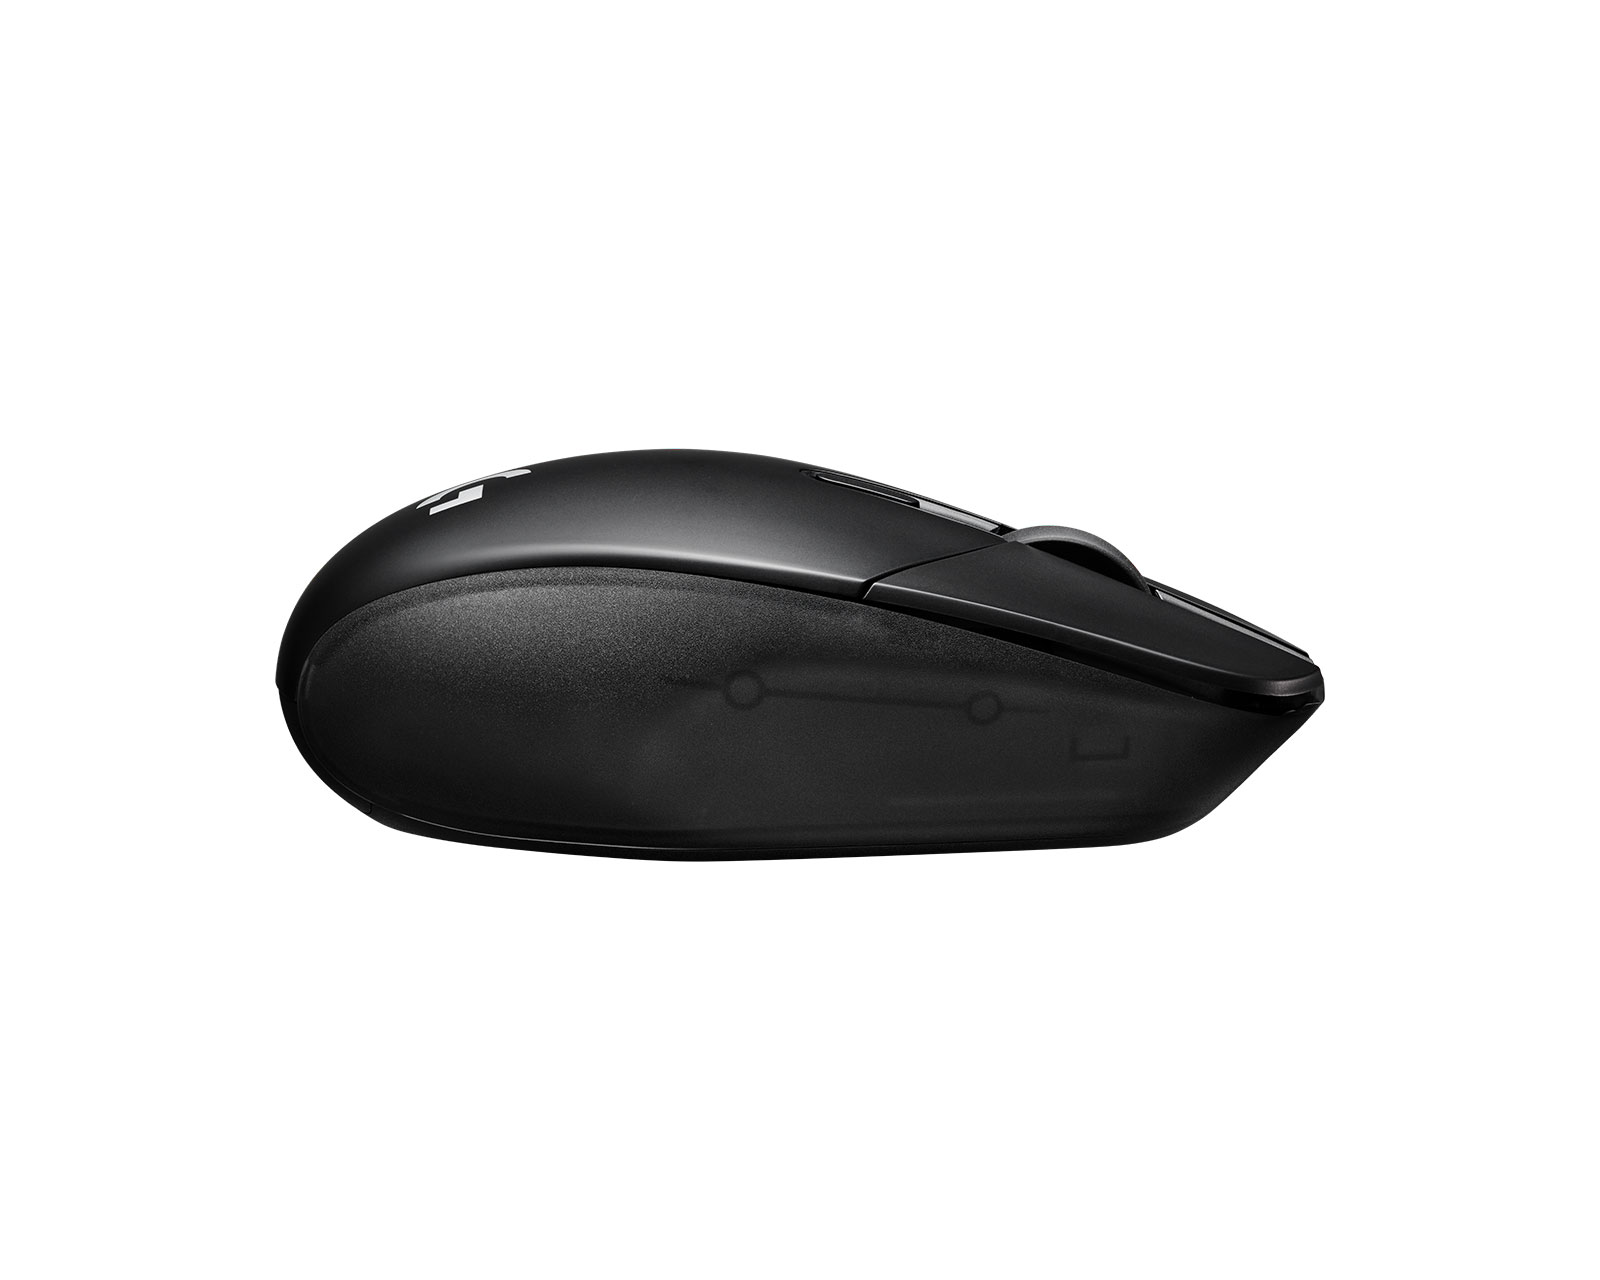 G303 Shroud Wireless Mouse - us.MaxGaming.com